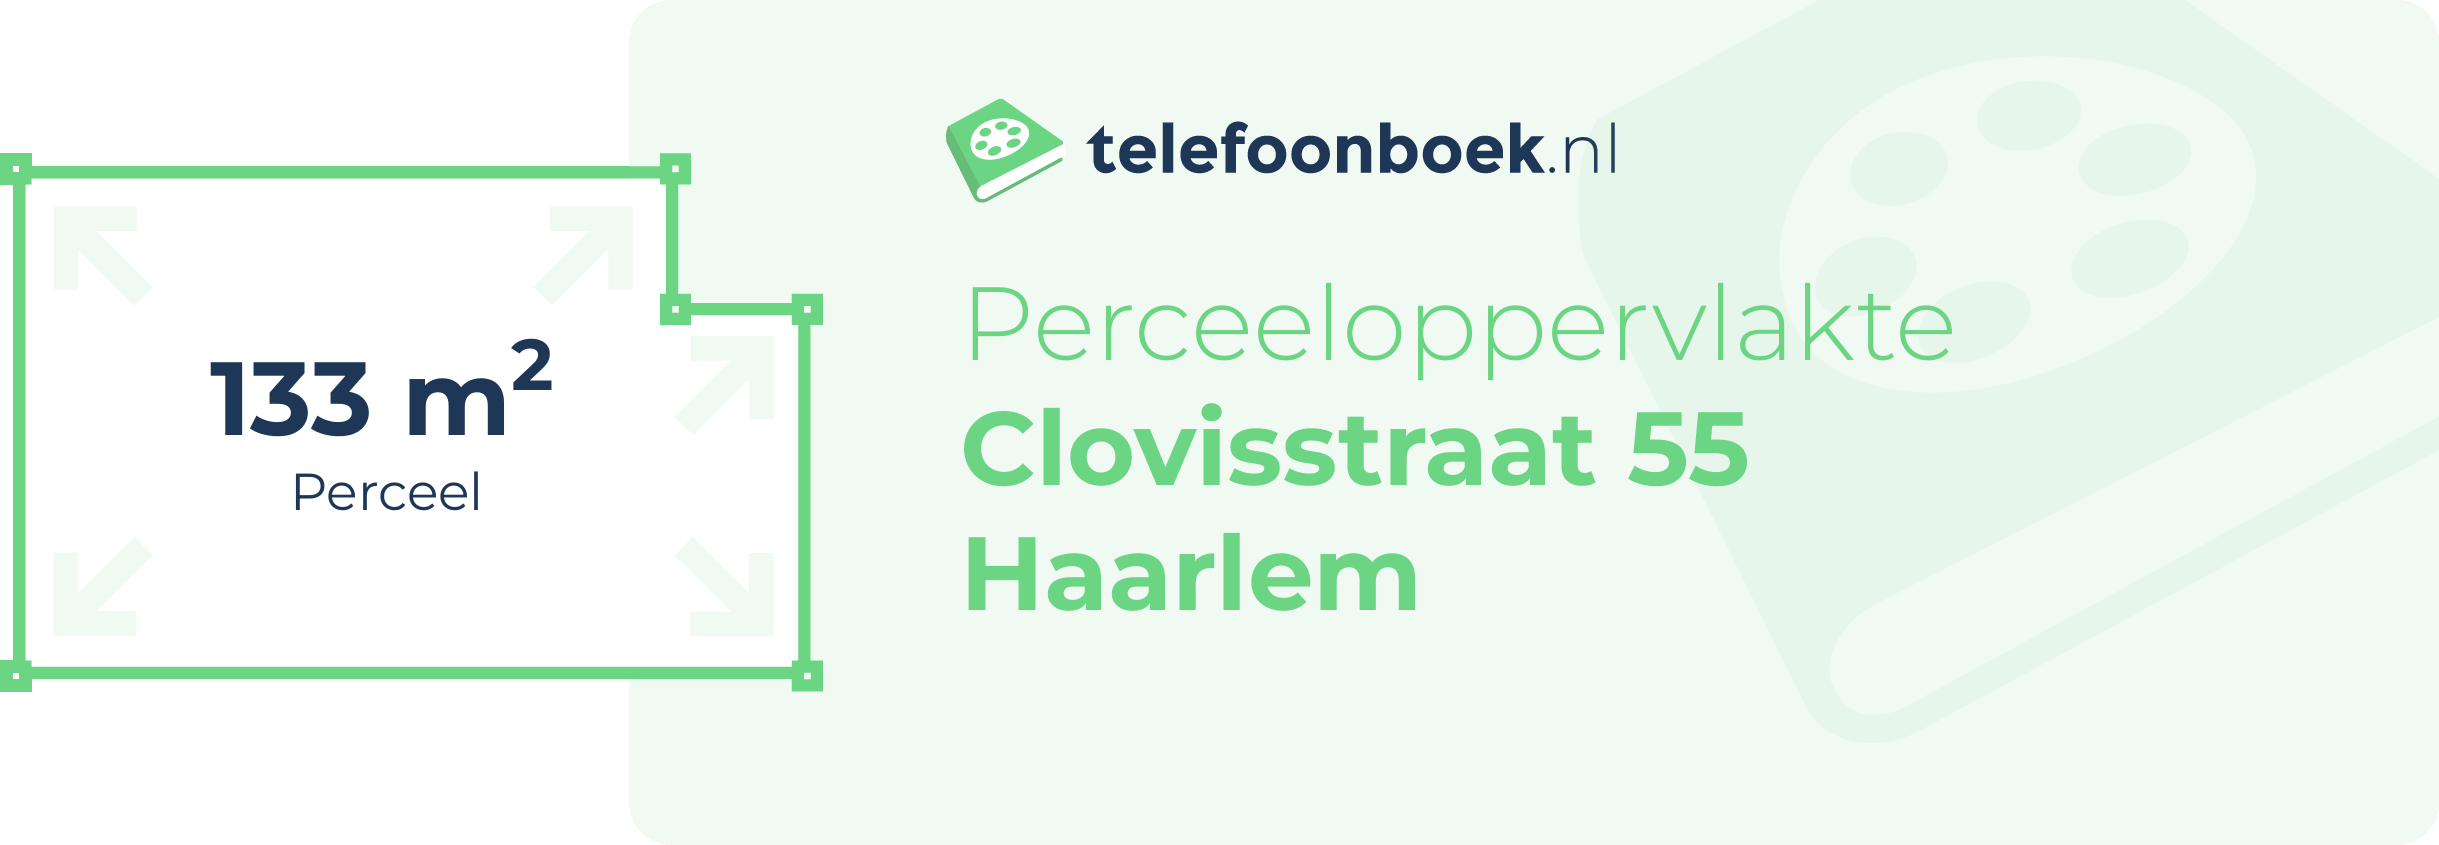 Perceeloppervlakte Clovisstraat 55 Haarlem